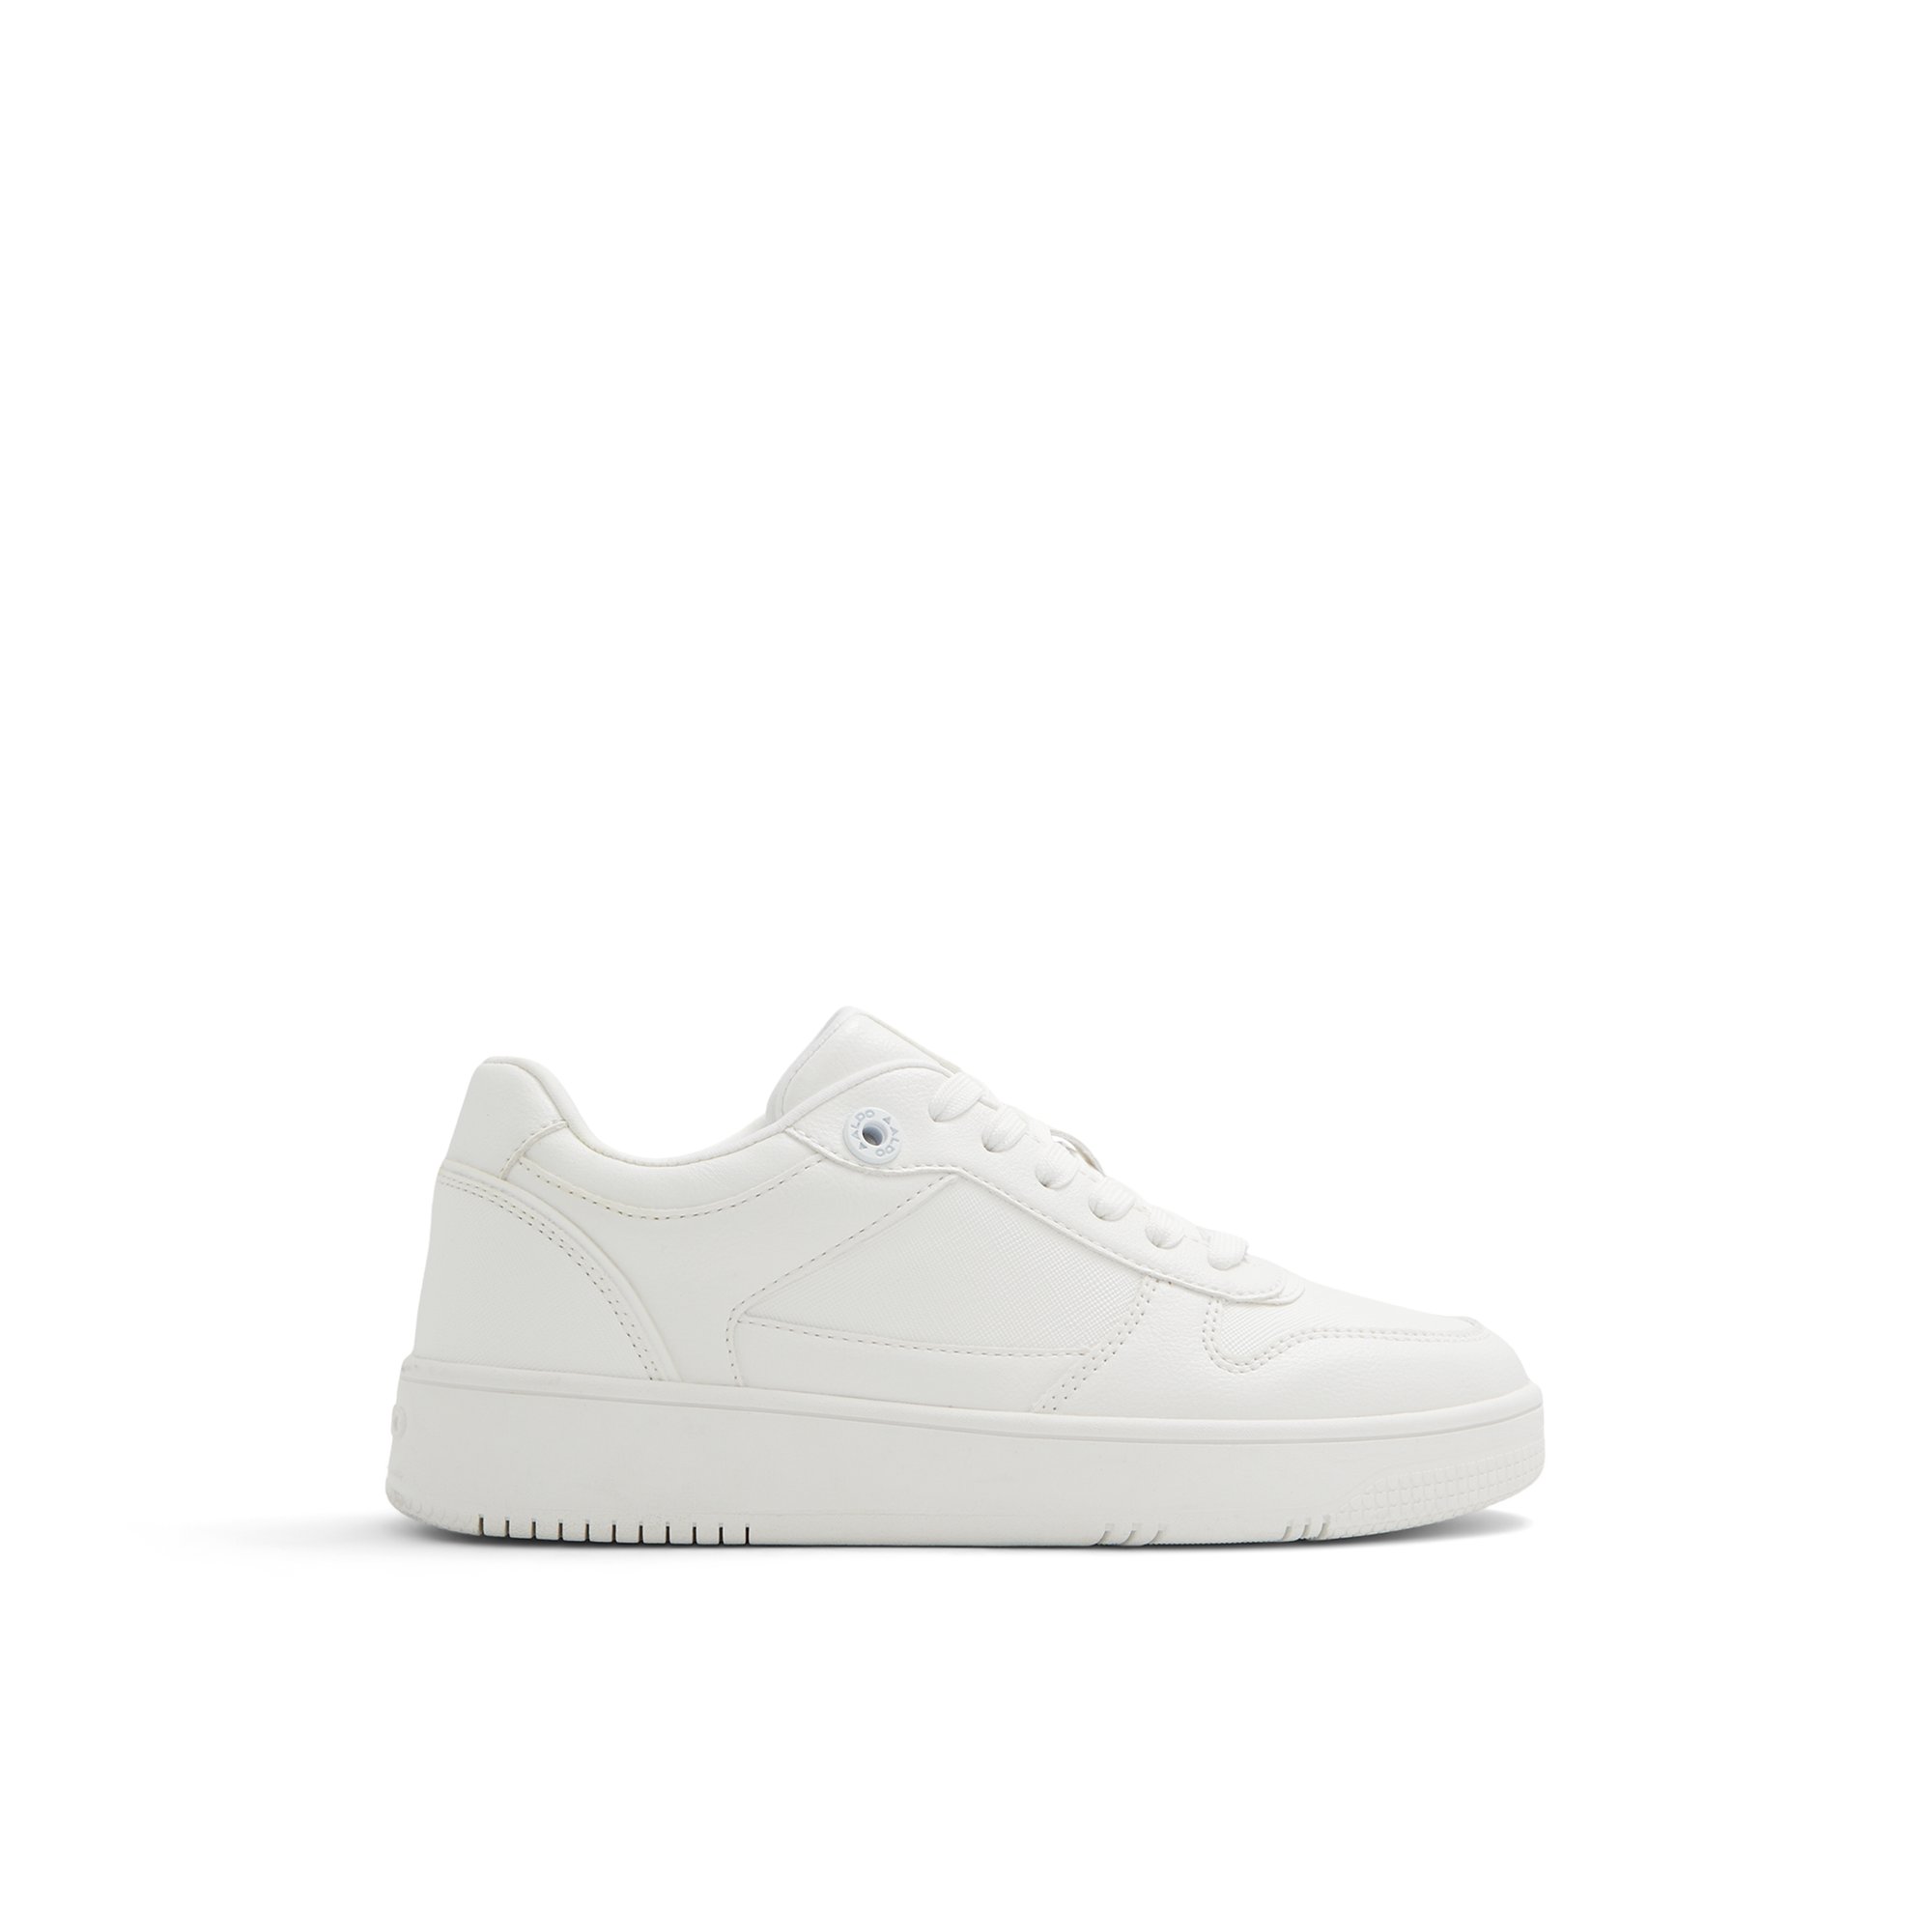 ALDO Retroact - Women's Sneakers Low Top - White